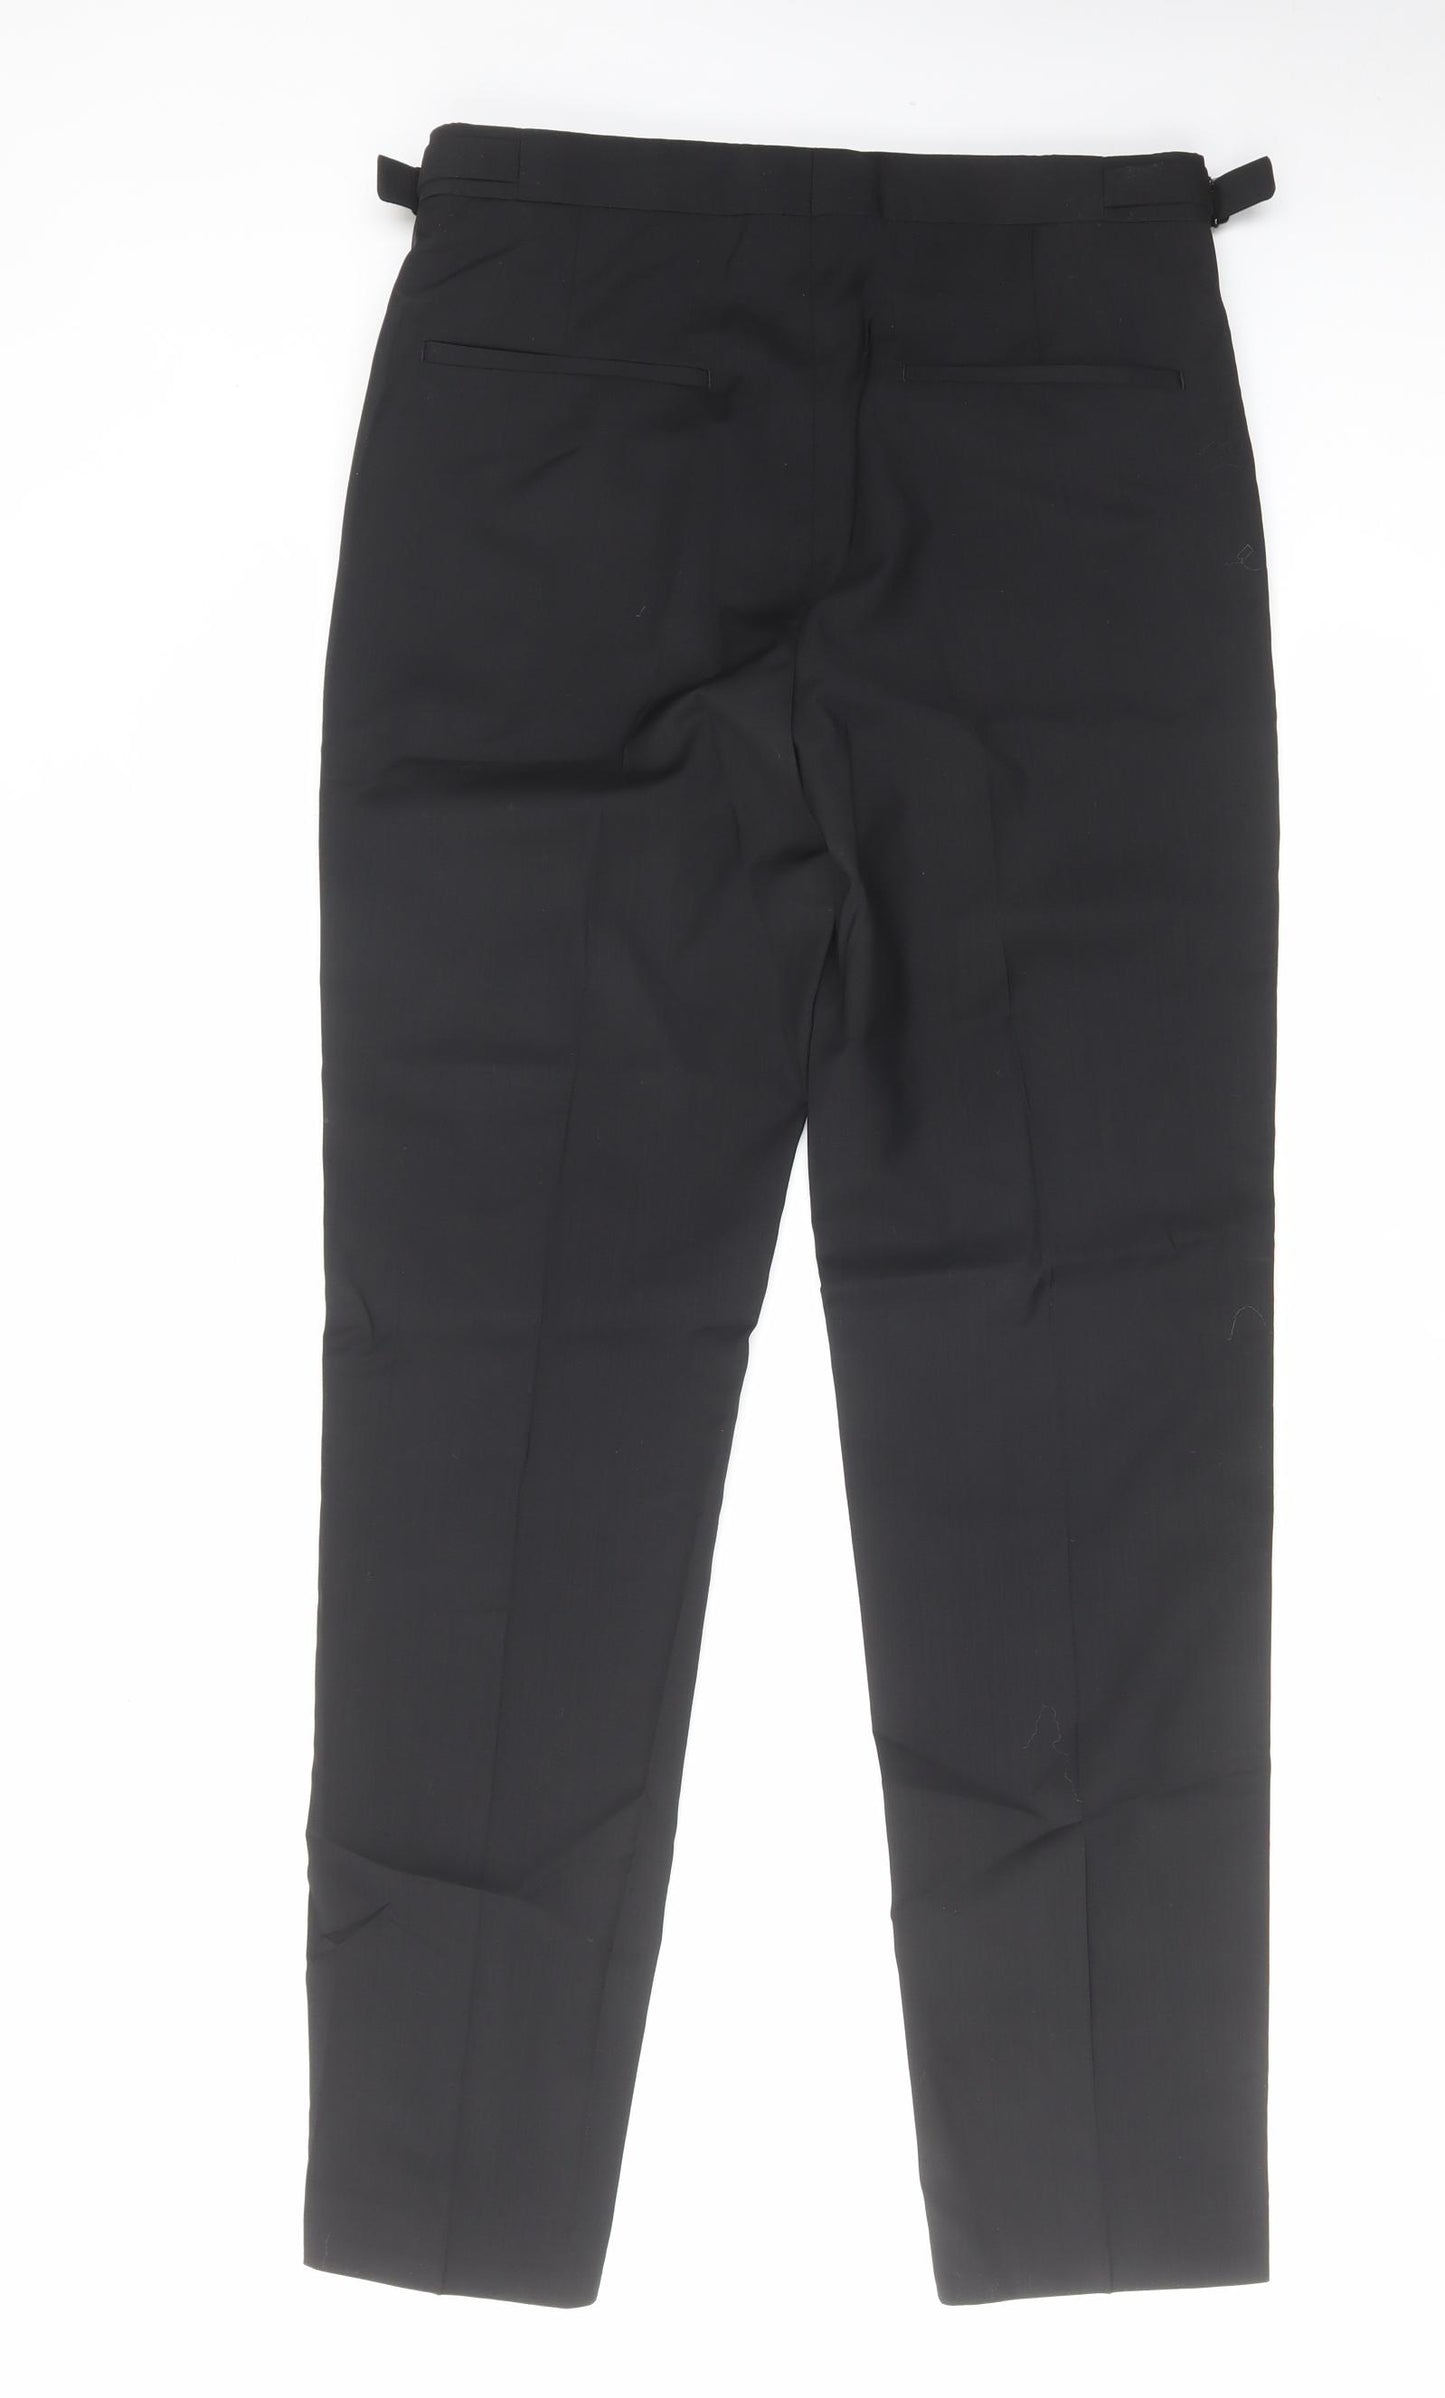 Jaeger Mens Black Wool Trousers Size 30 in L31 in Regular Hook & Eye